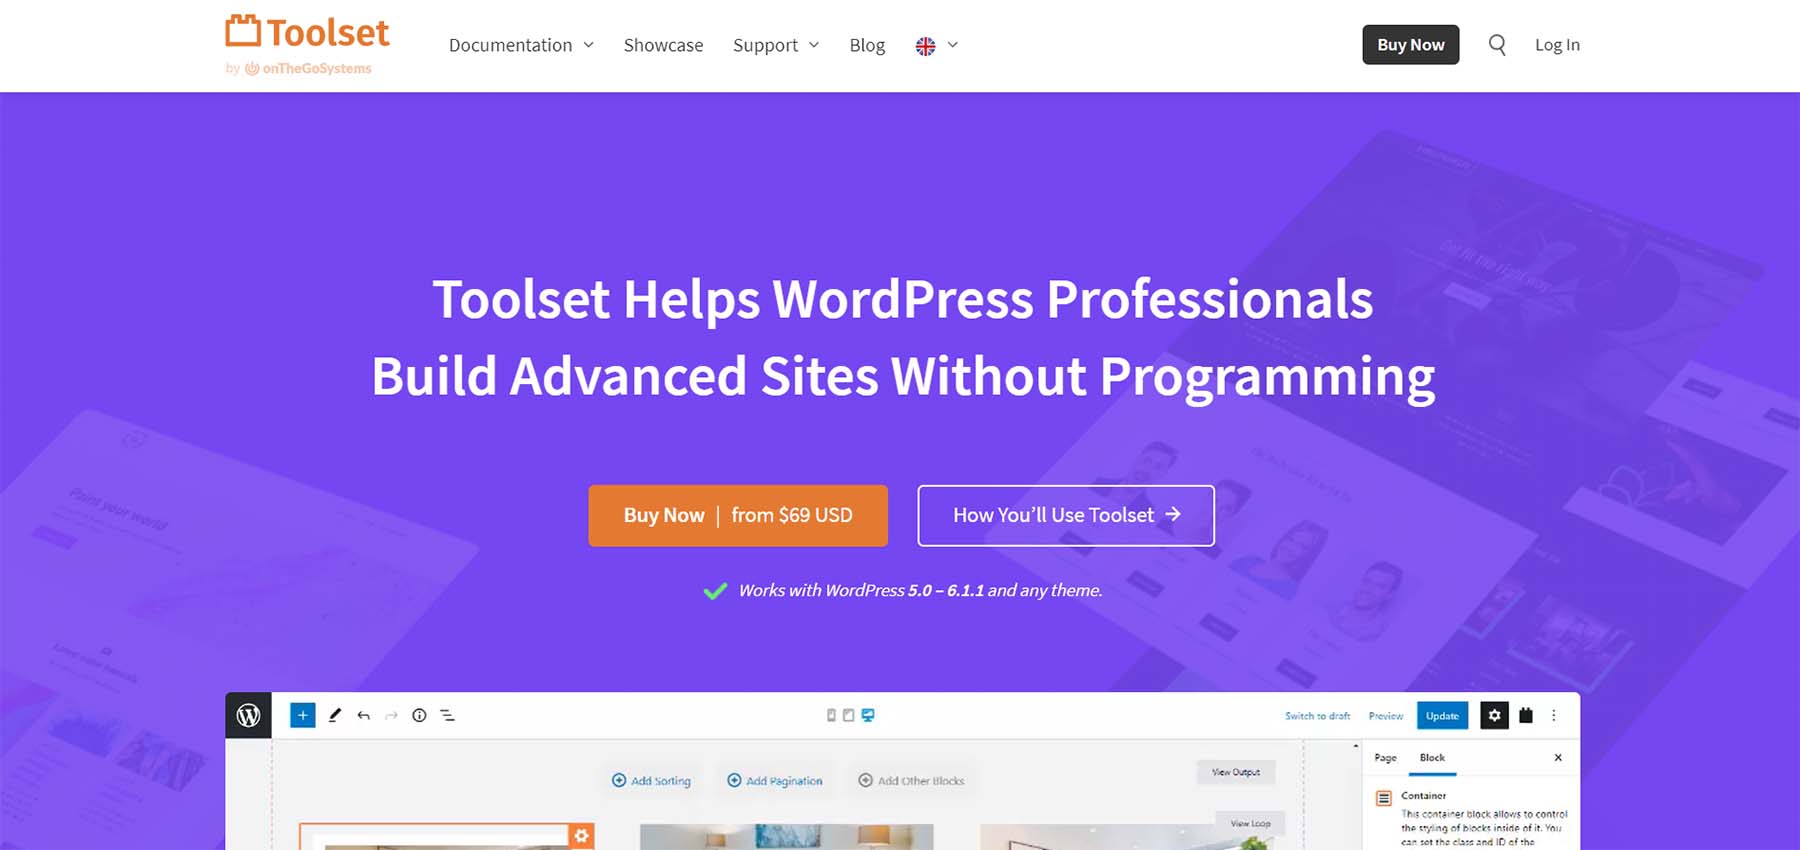 Toolset WordPress Professionals Toolkit